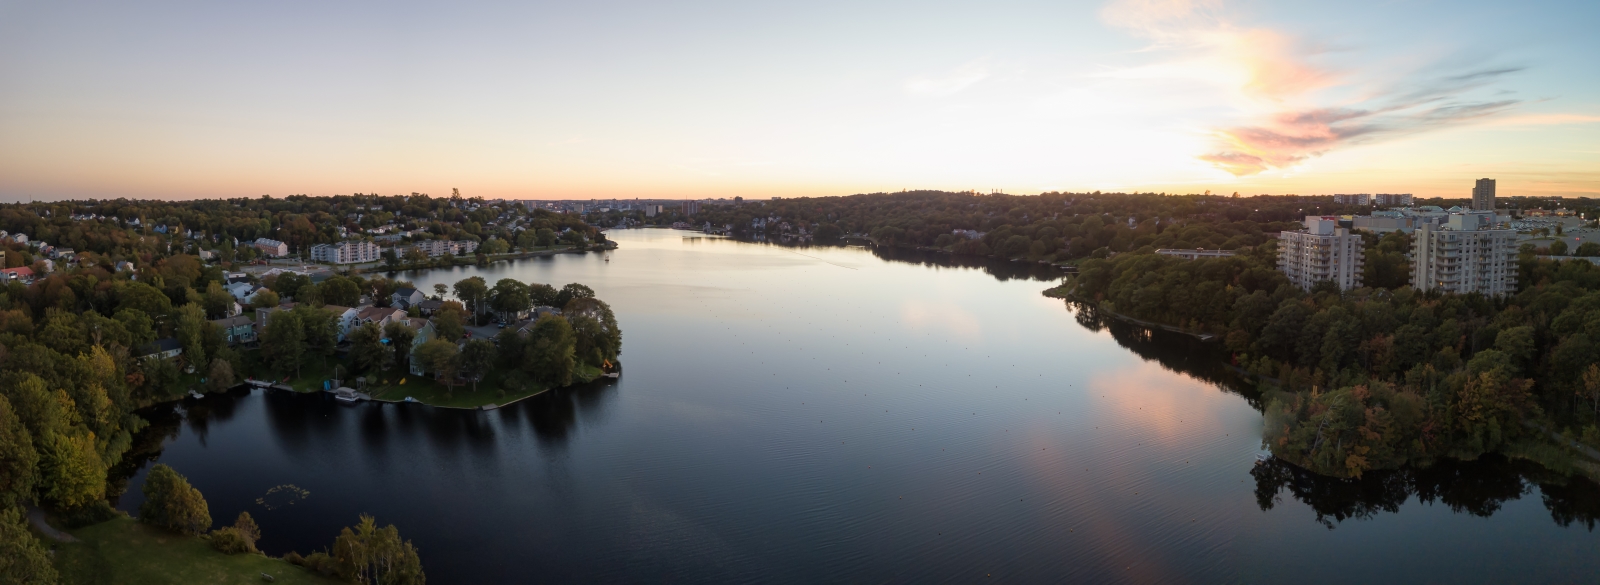 View of a lake in Dartmouth, Nova Scotia